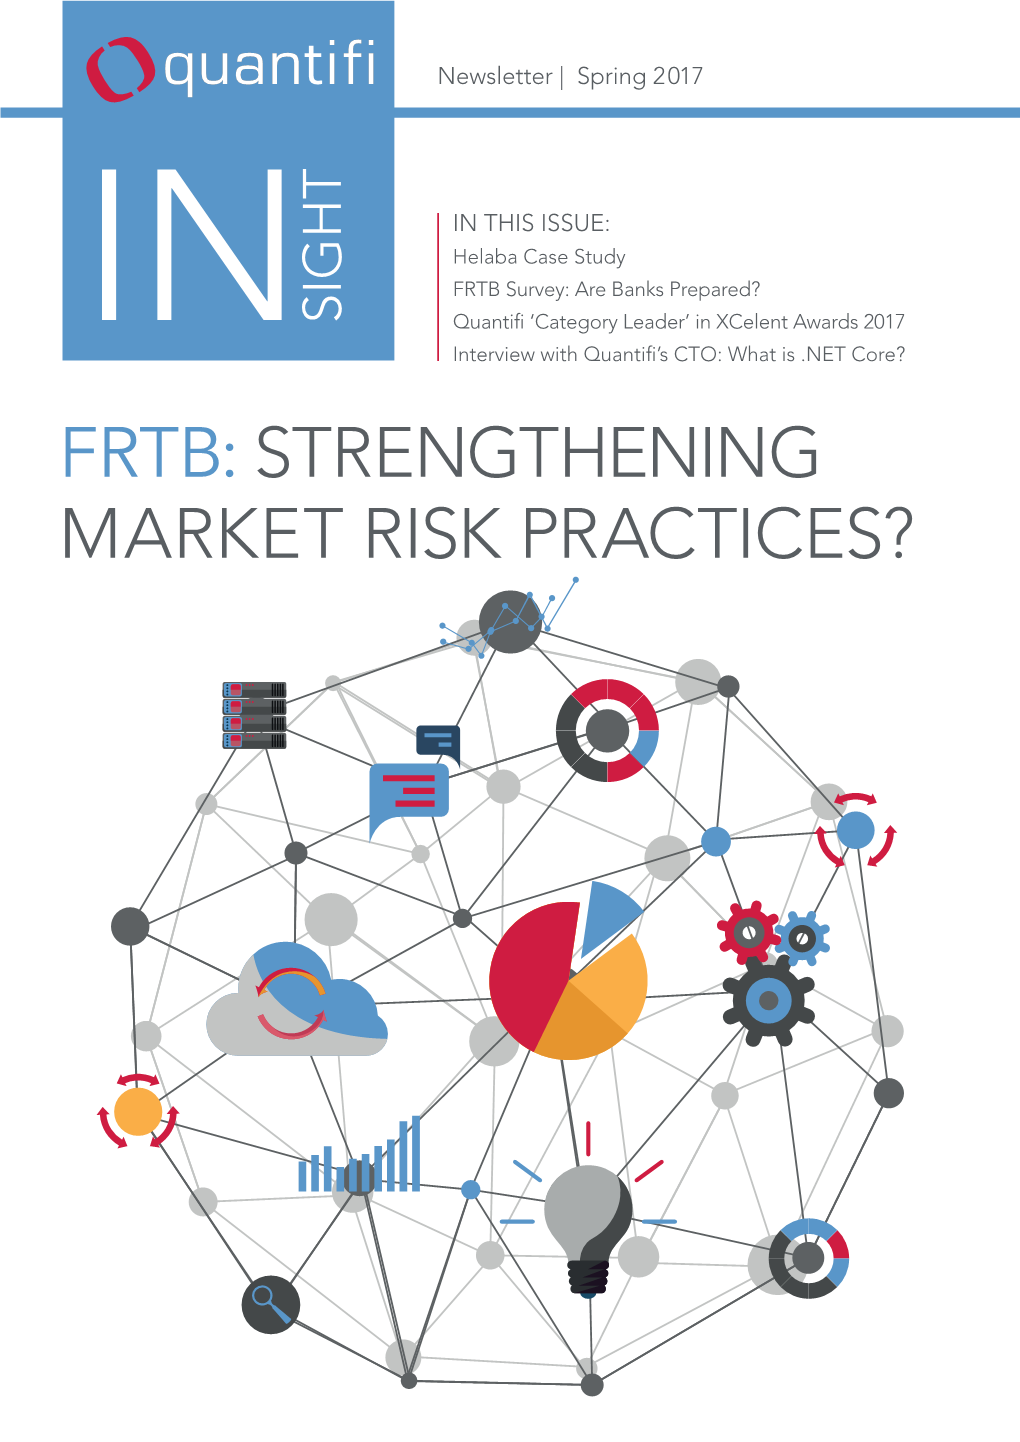 FRTB Survey: Are Banks Prepared?